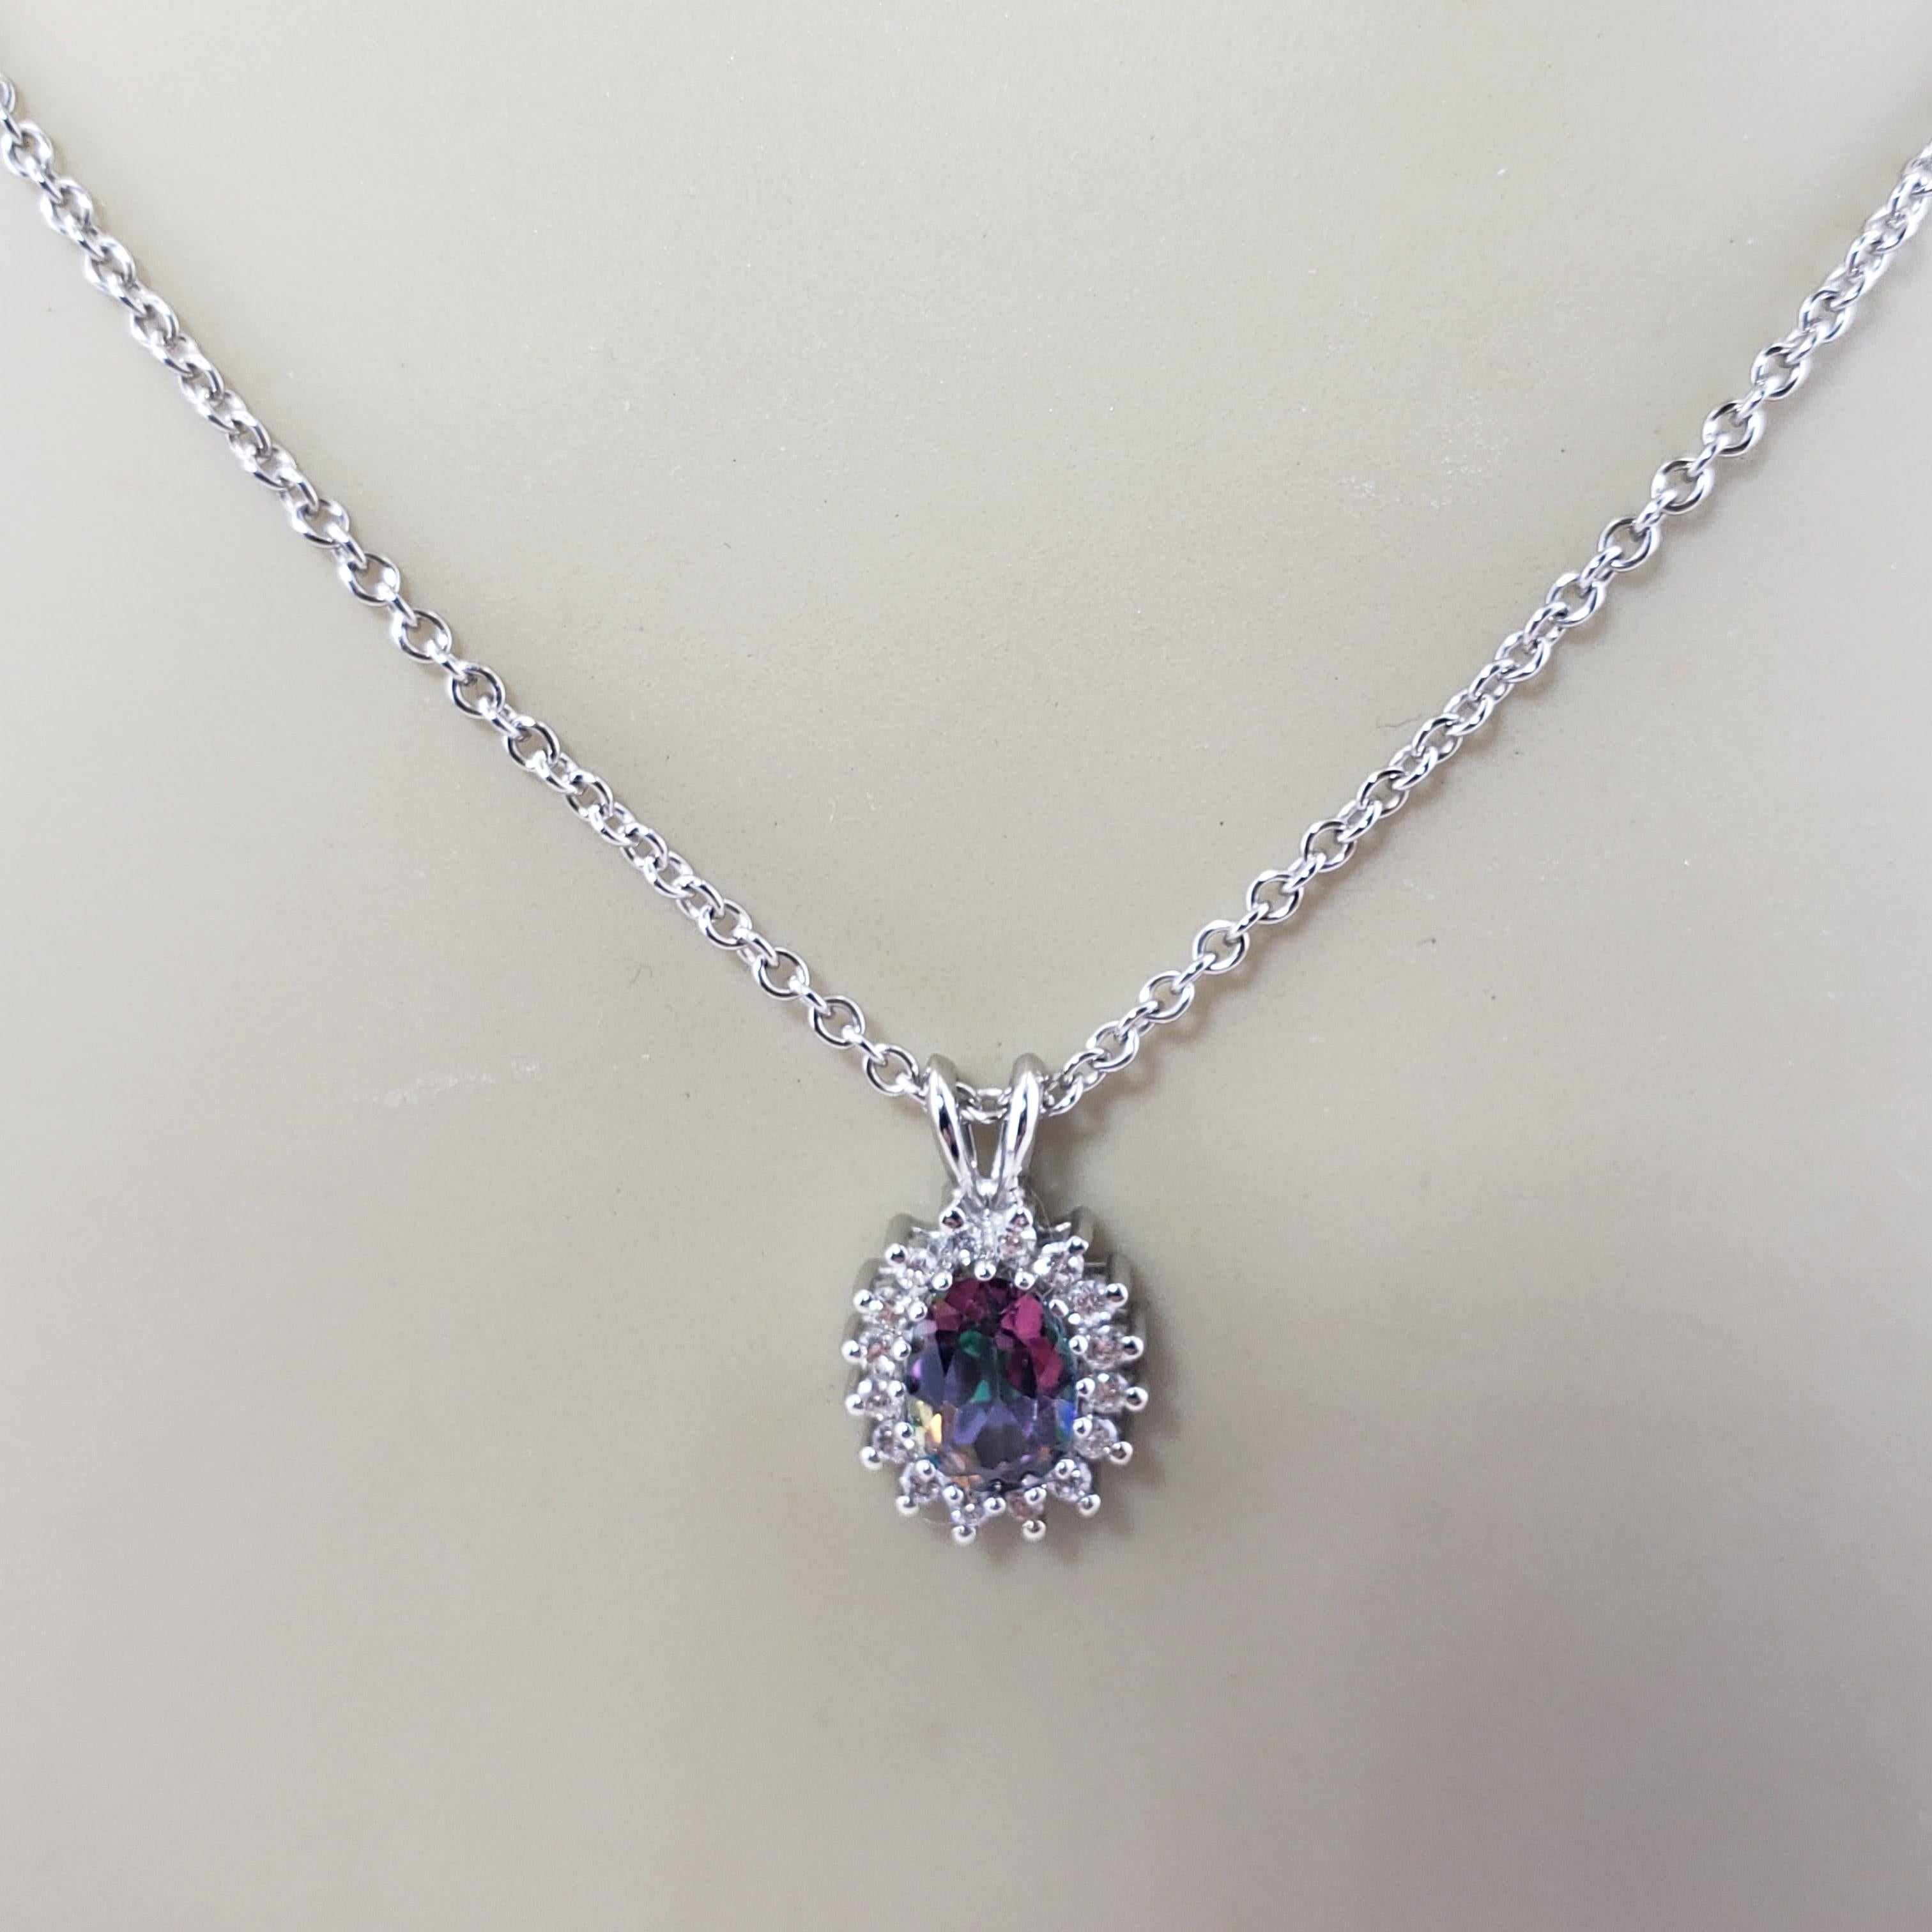 14 Karat White Gold Mystic Topaz and Diamond Pendant Necklace #12879 For Sale 3